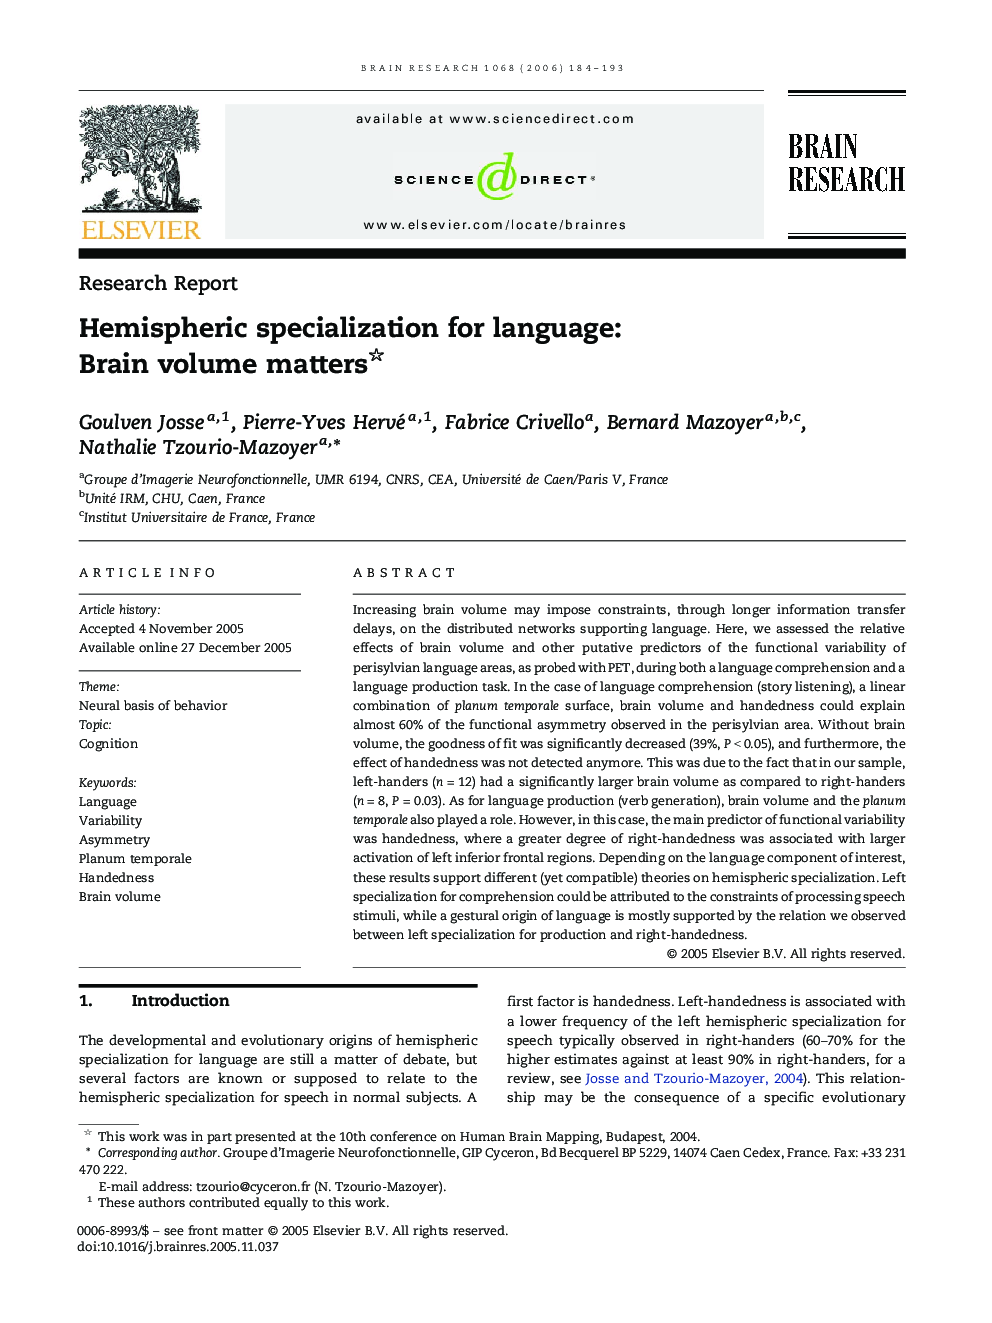 Hemispheric specialization for language: Brain volume matters 